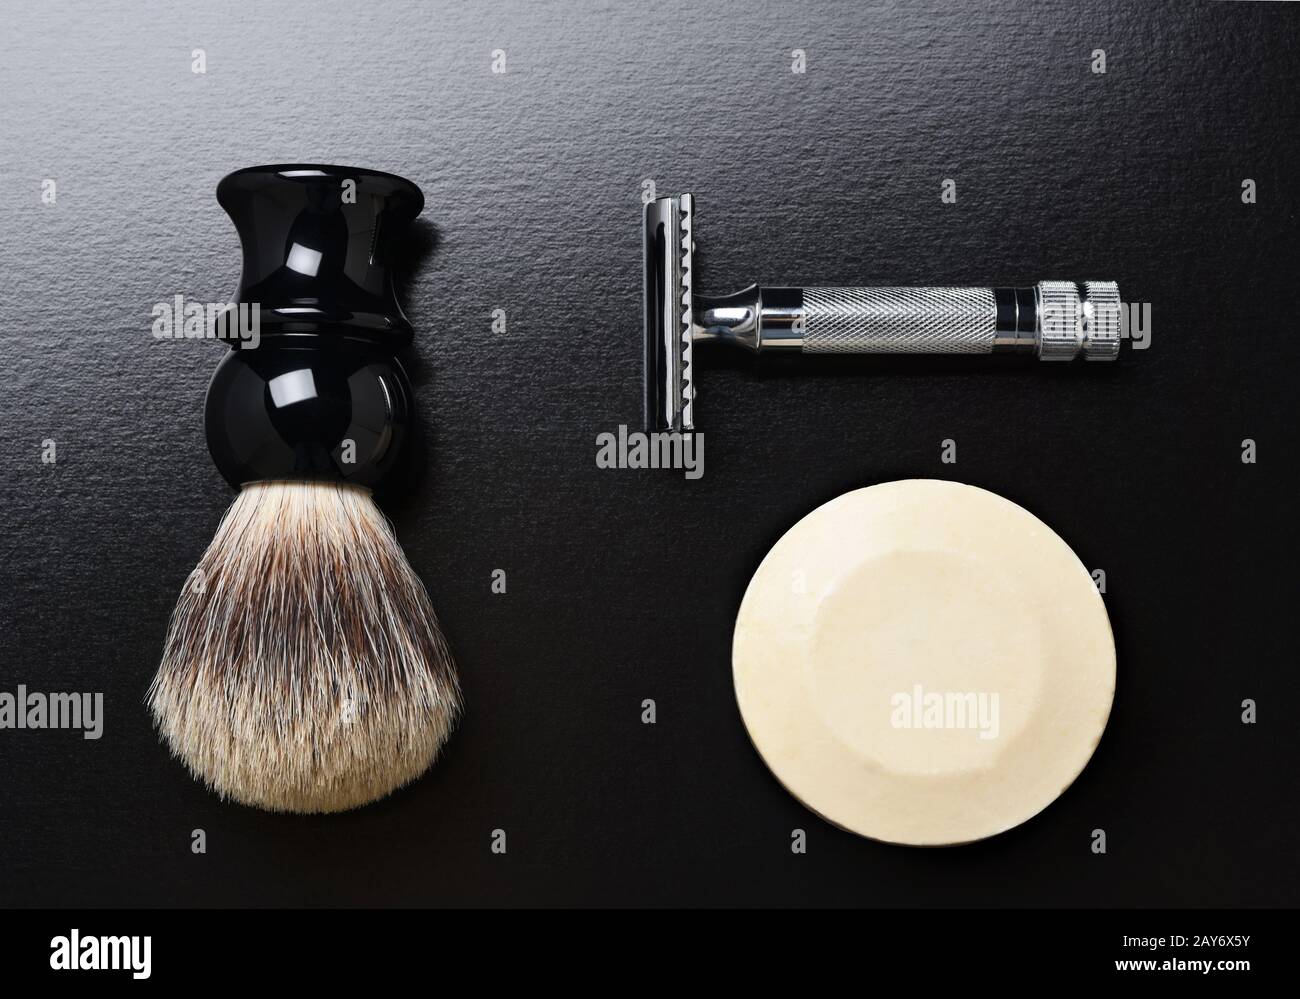 Flat Lay Shaving Still Life. A razor shaving brush and bar of soap on black. Stock Photo